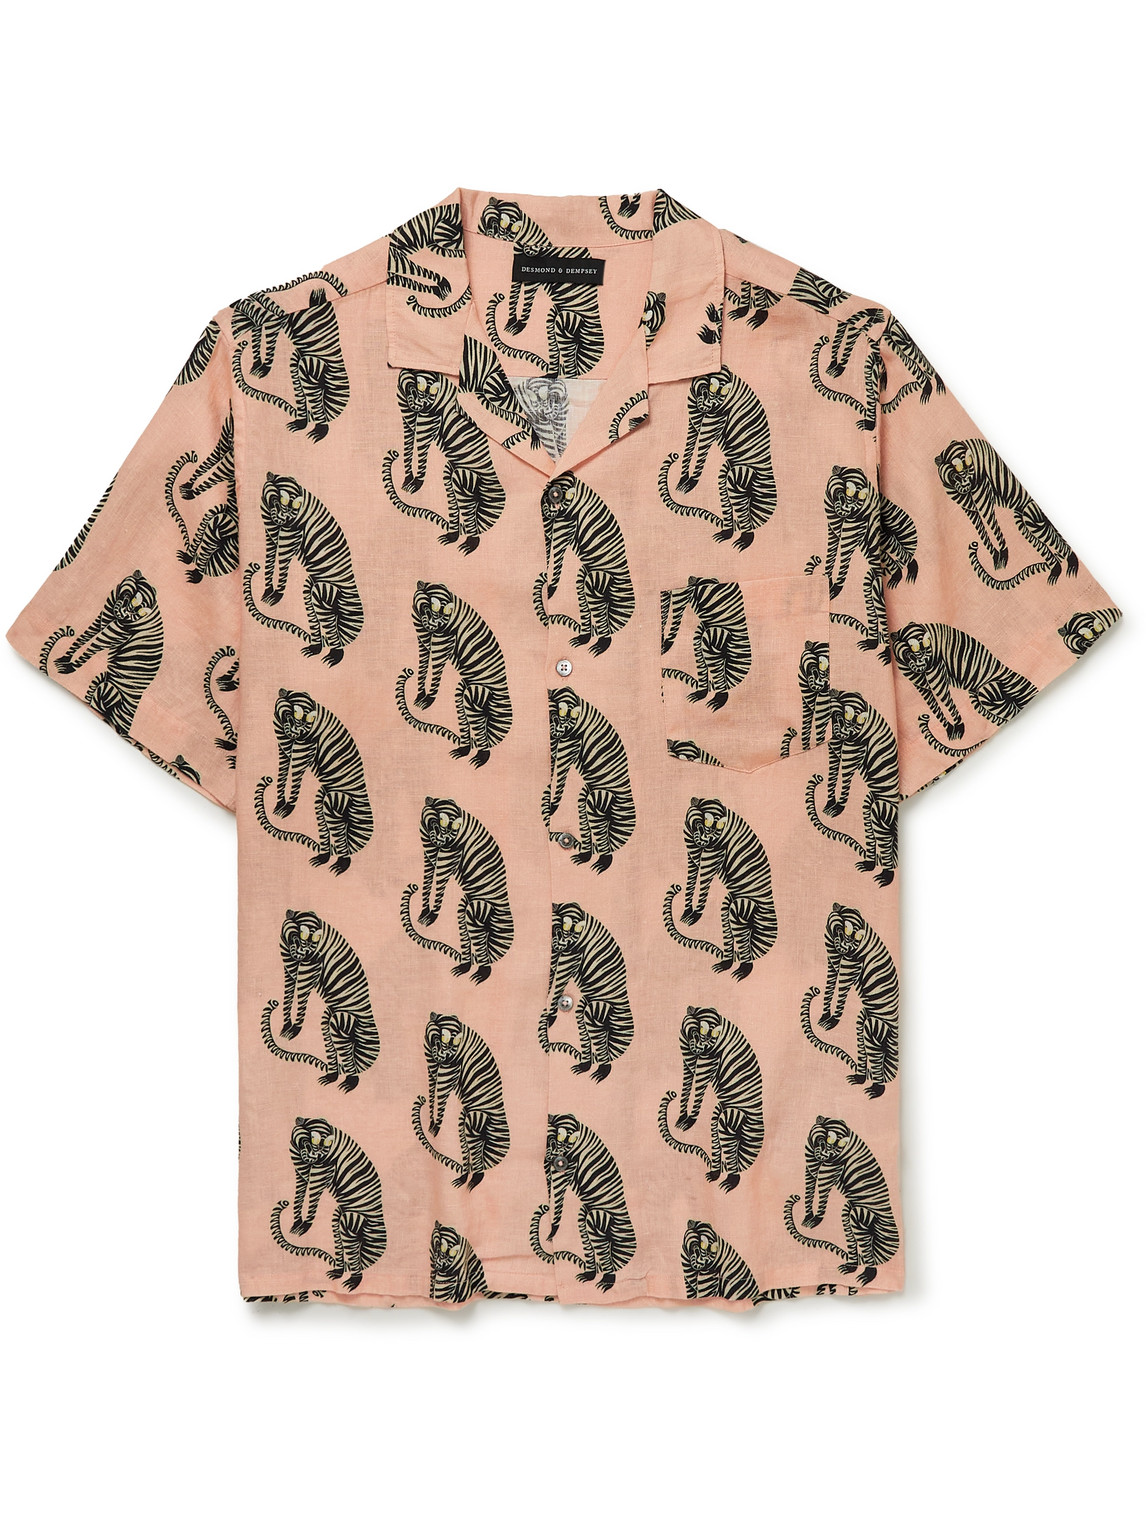 Desmond & Dempsey Sansindo Tiger-print Linen Pyjama Shirt In Pink